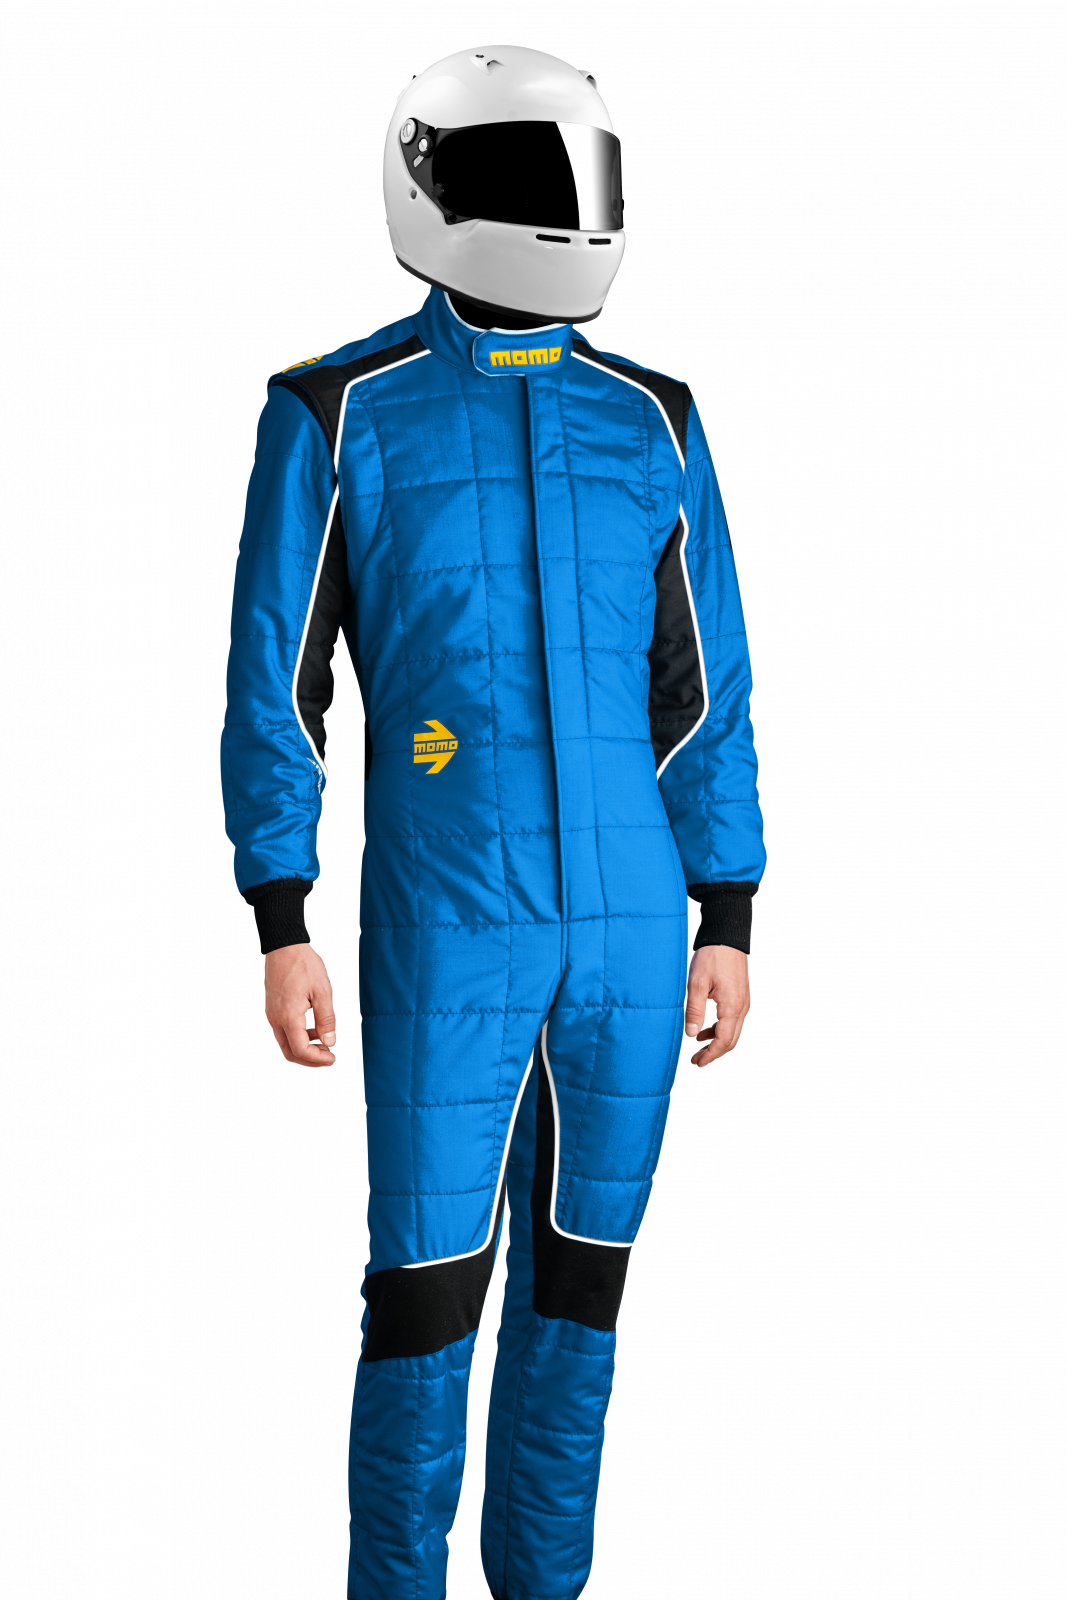 MOMO Corsa Evo Blue Size 60 Racing Suit TUCOEVOBLU60